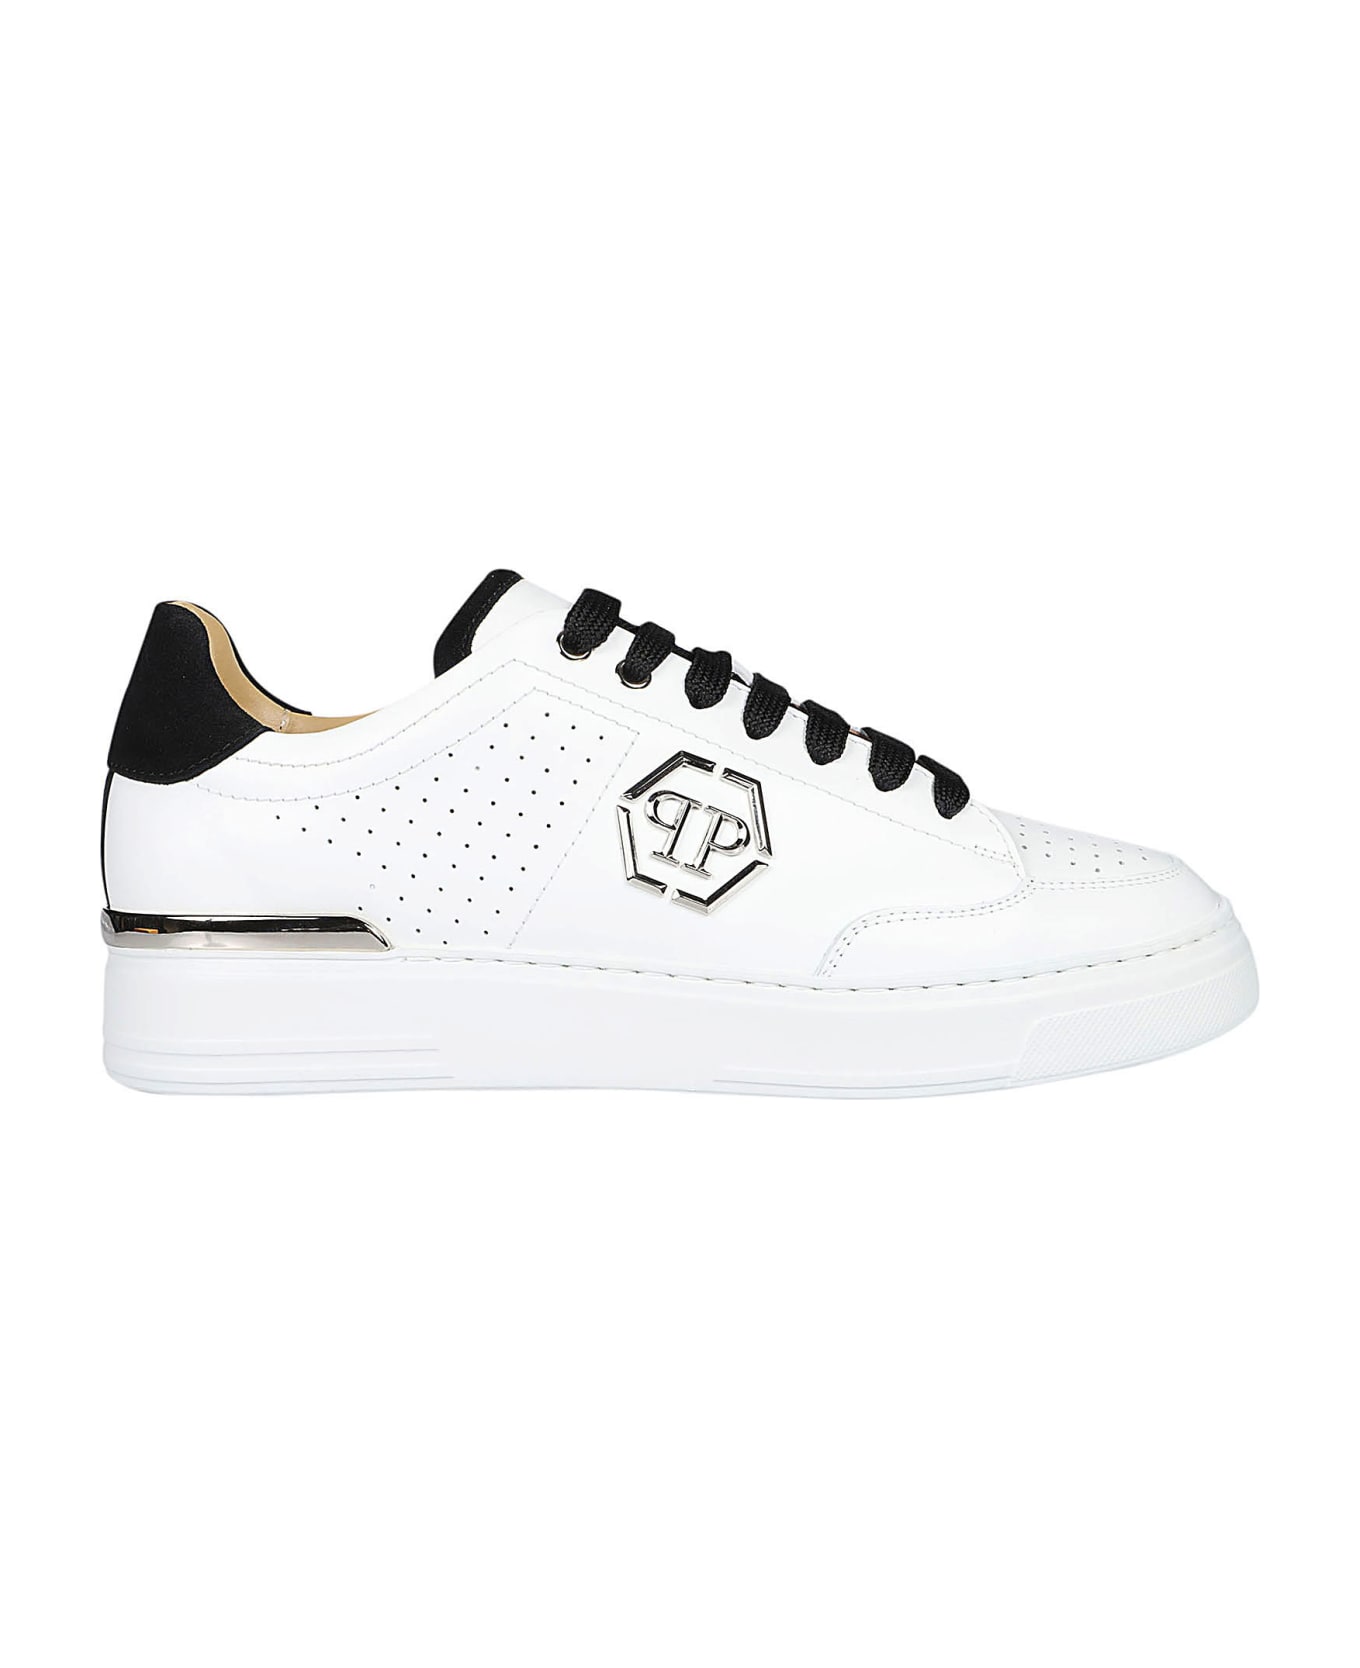 Philipp Plein Low Top Sneakers - White/black スニーカー